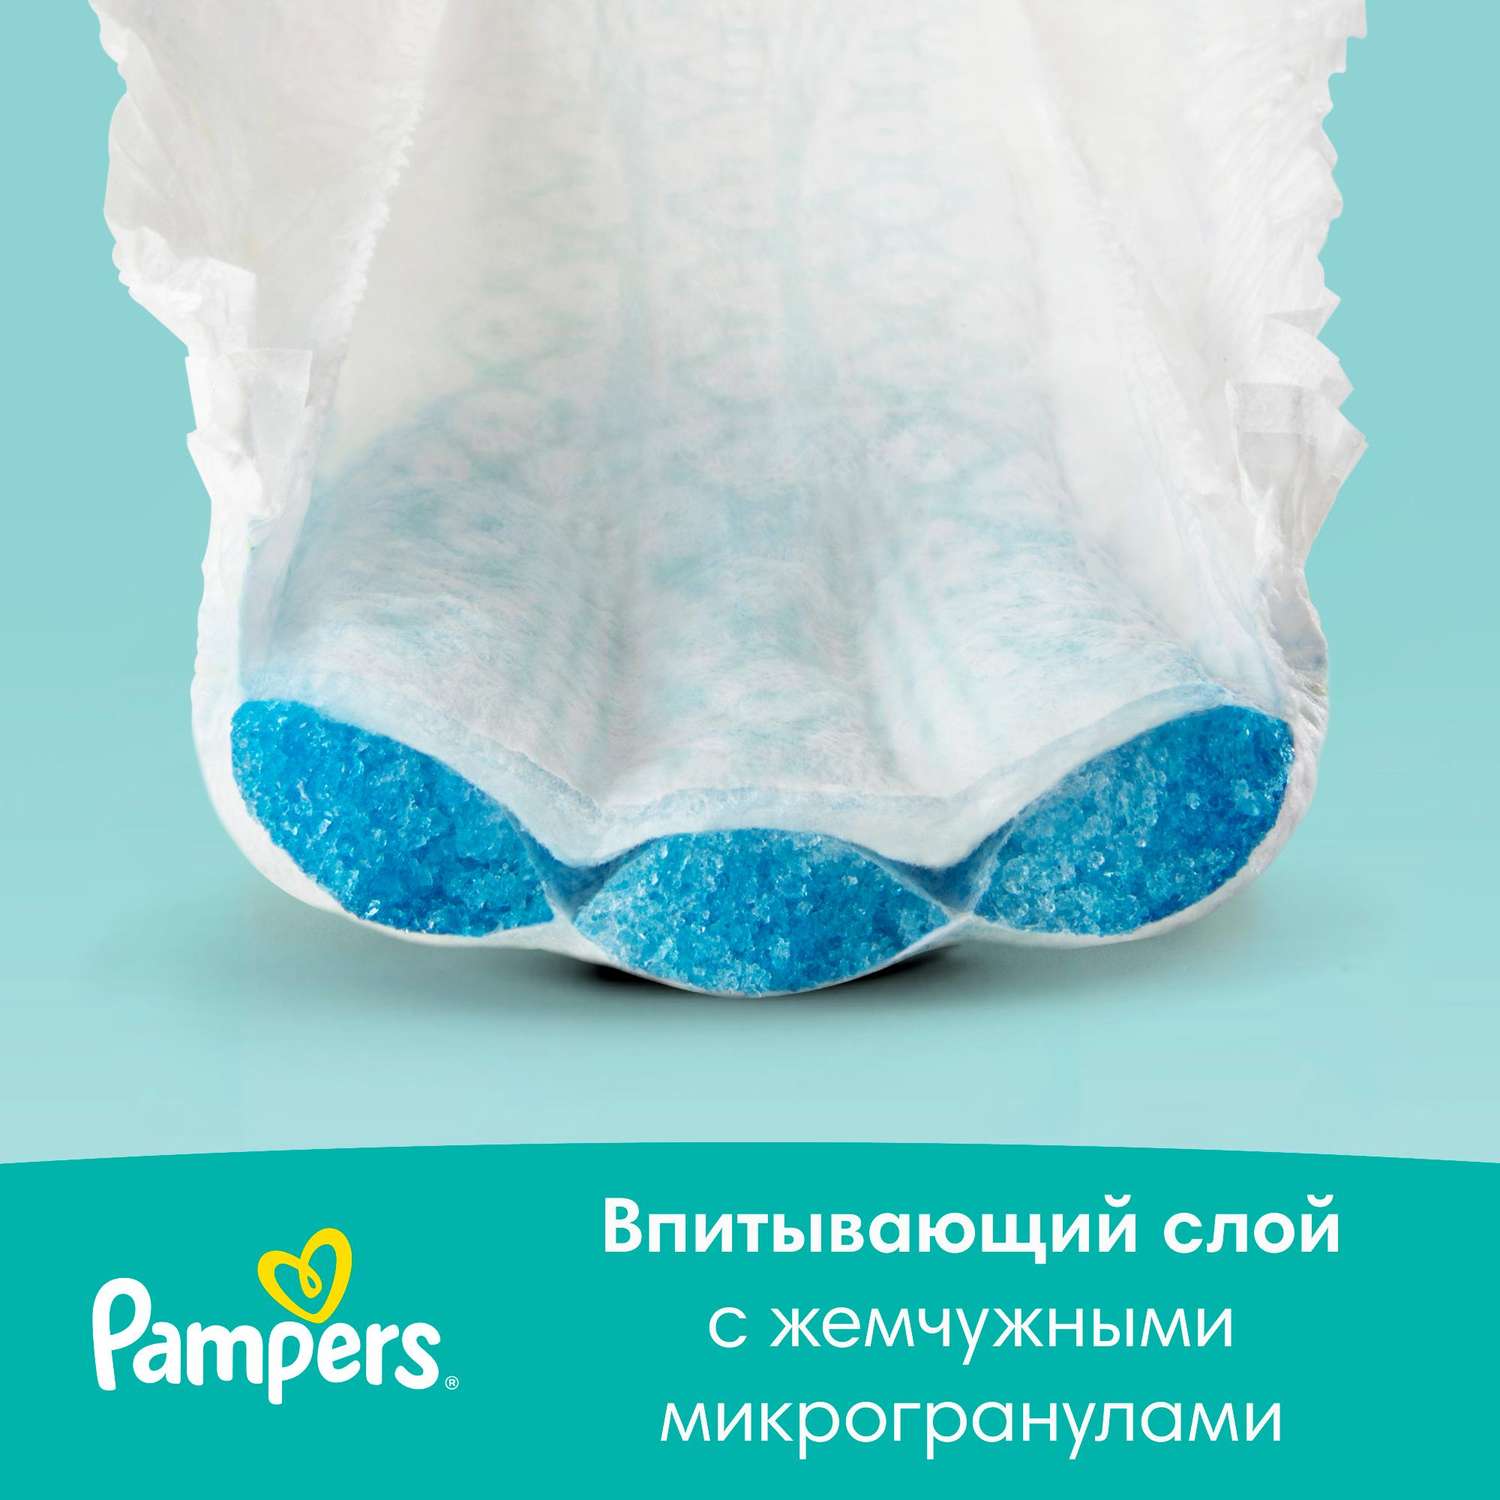 Подгузники Pampers Active Baby-Dry 3 6-10кг 124шт - фото 3